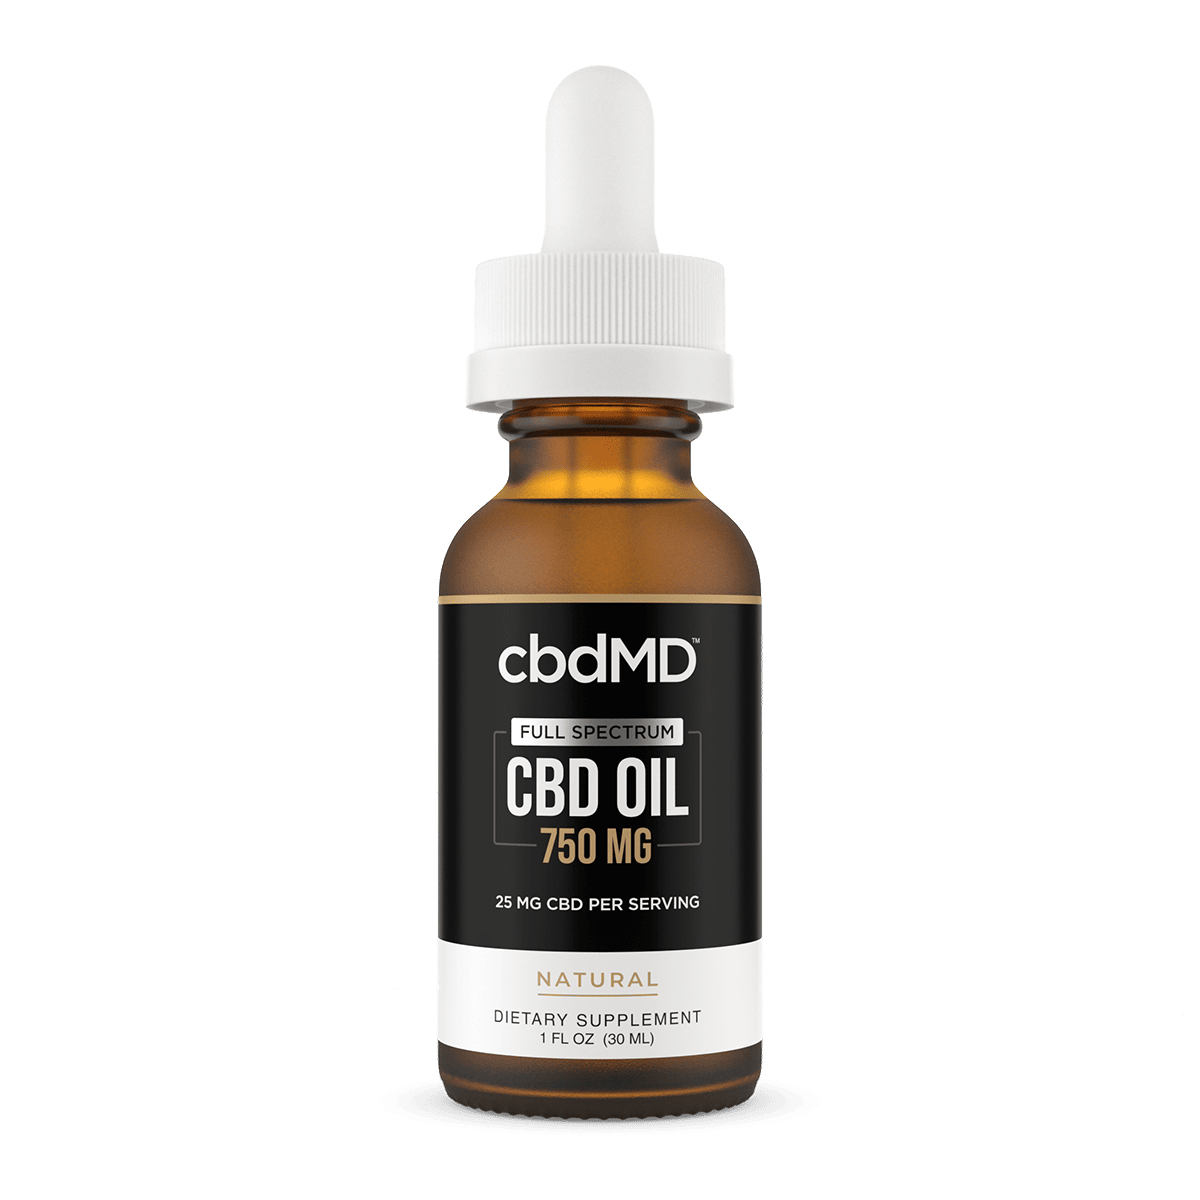 cbdMD, CBD Oil Tincture, Full Spectrum, Natural Flavor, 1oz, 750mg CBD